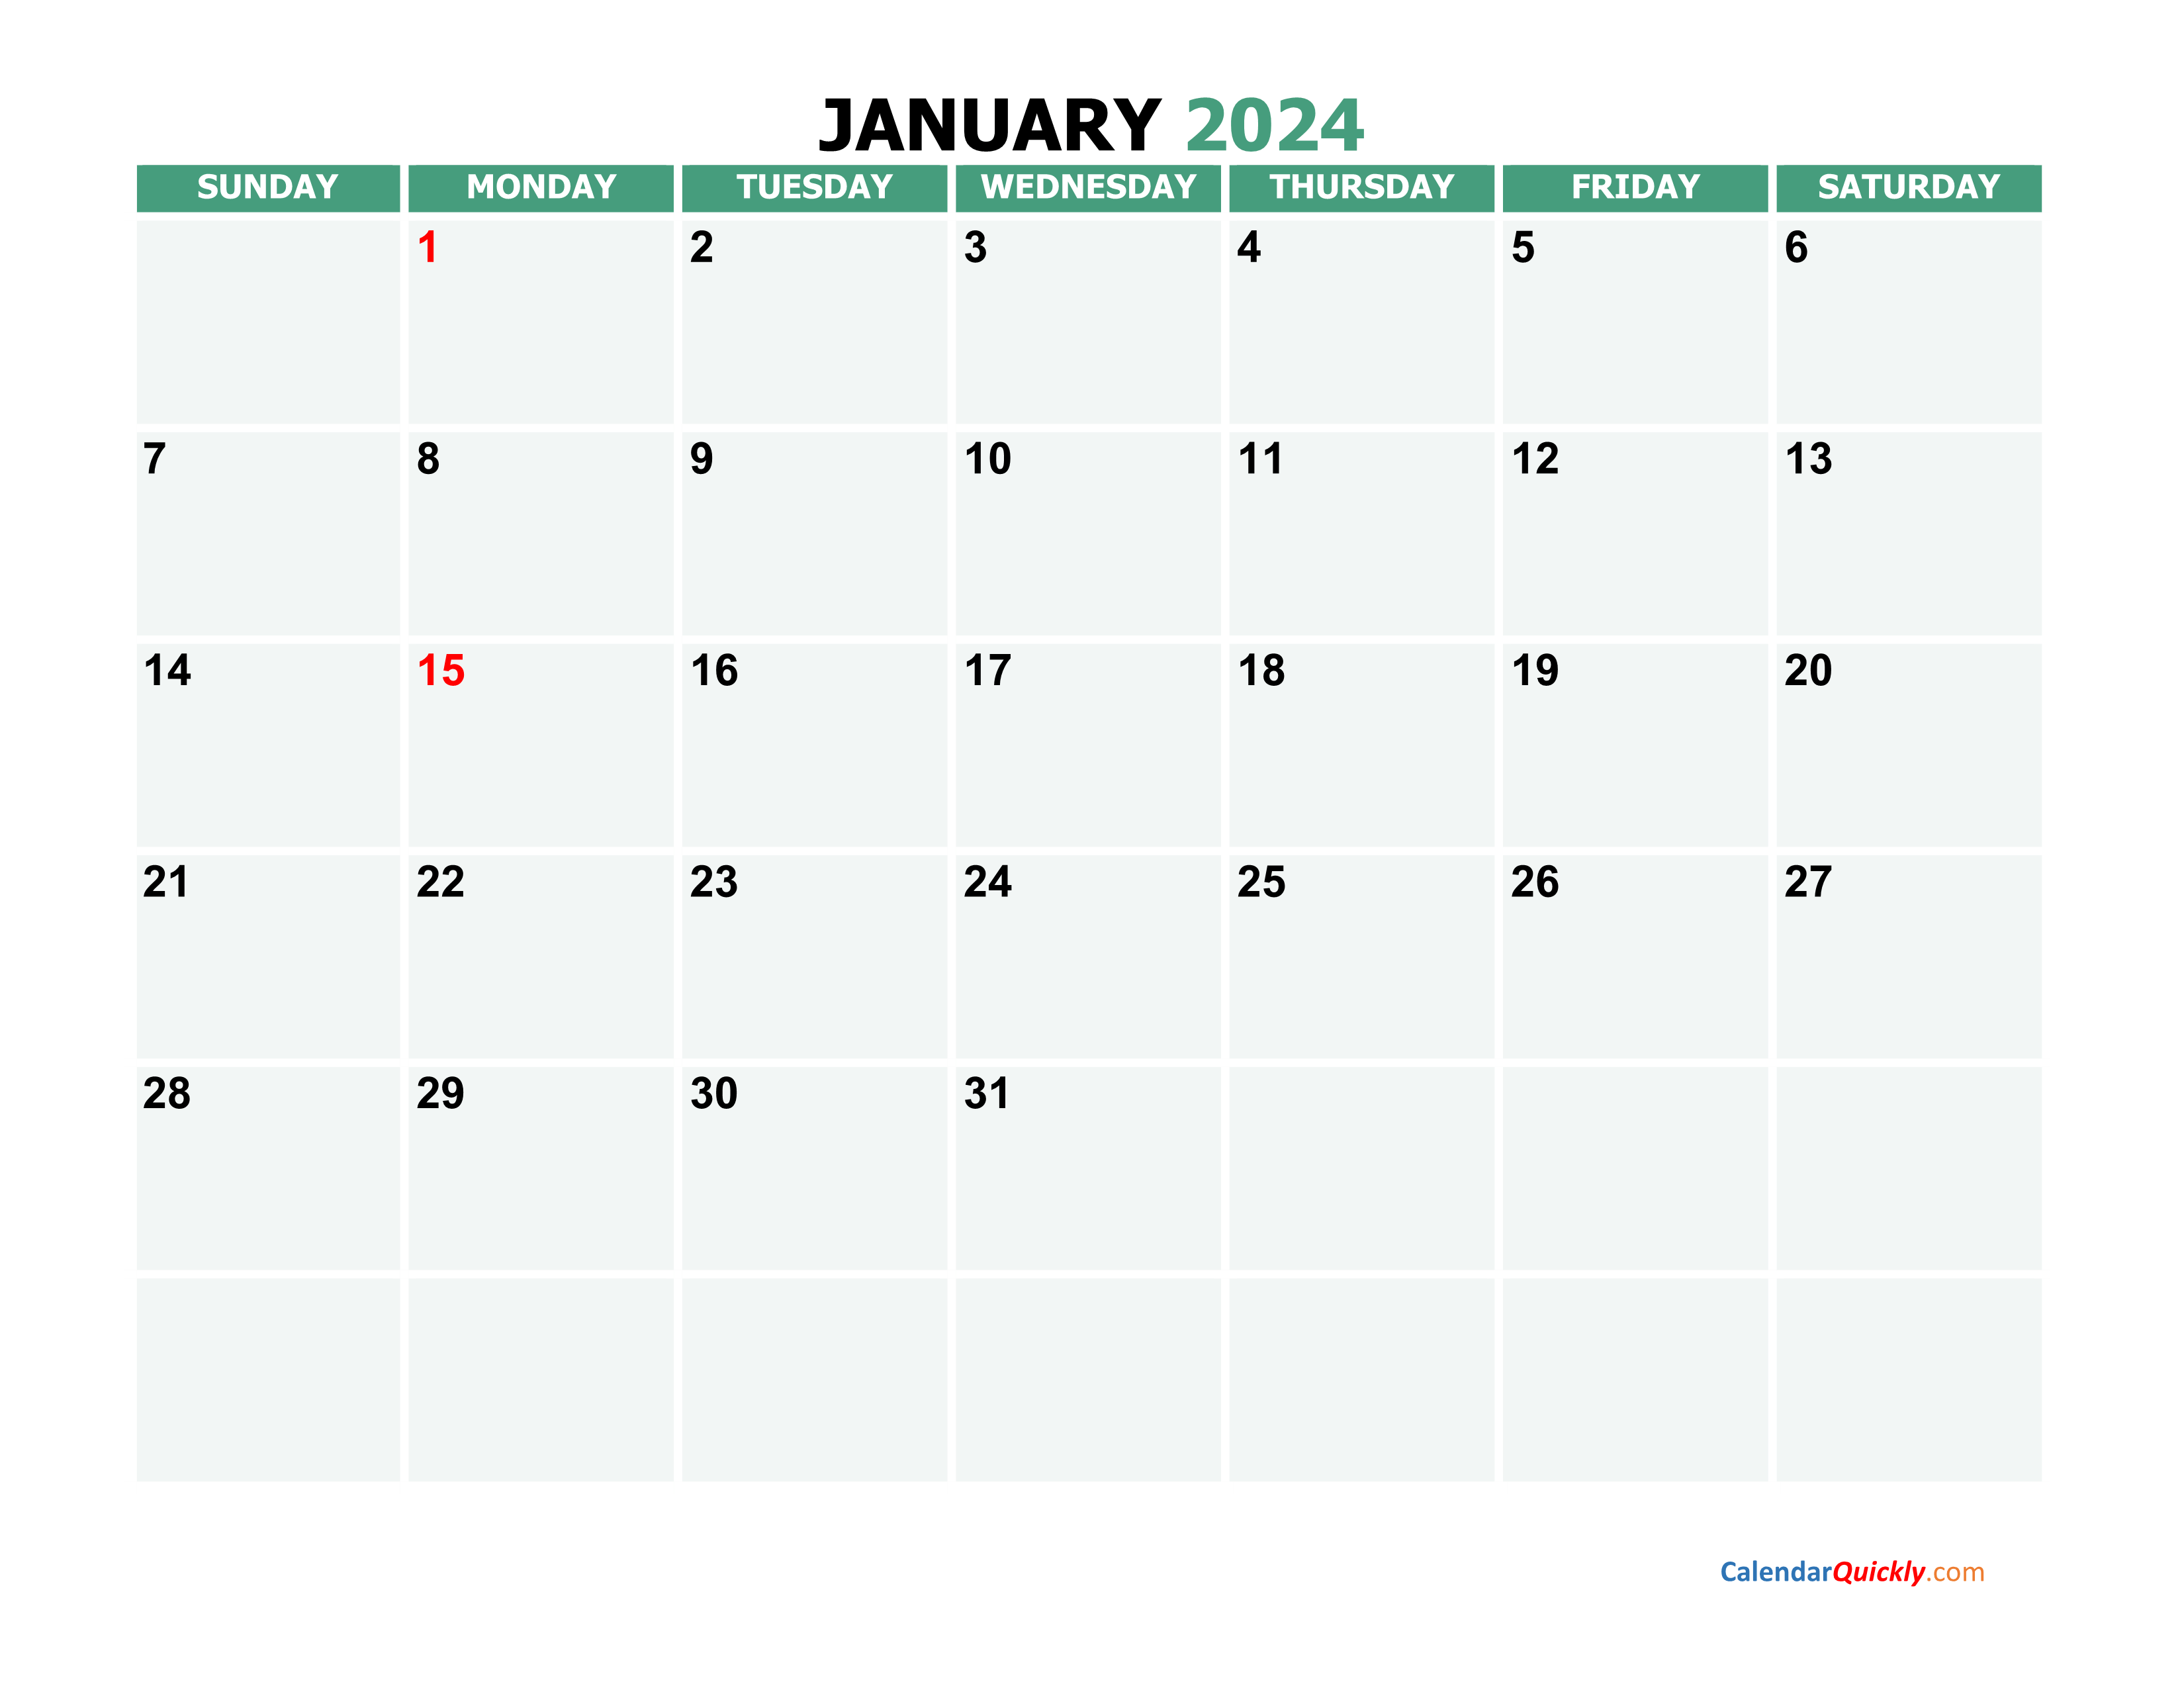 January 2024 Calendars Calendar Quickly